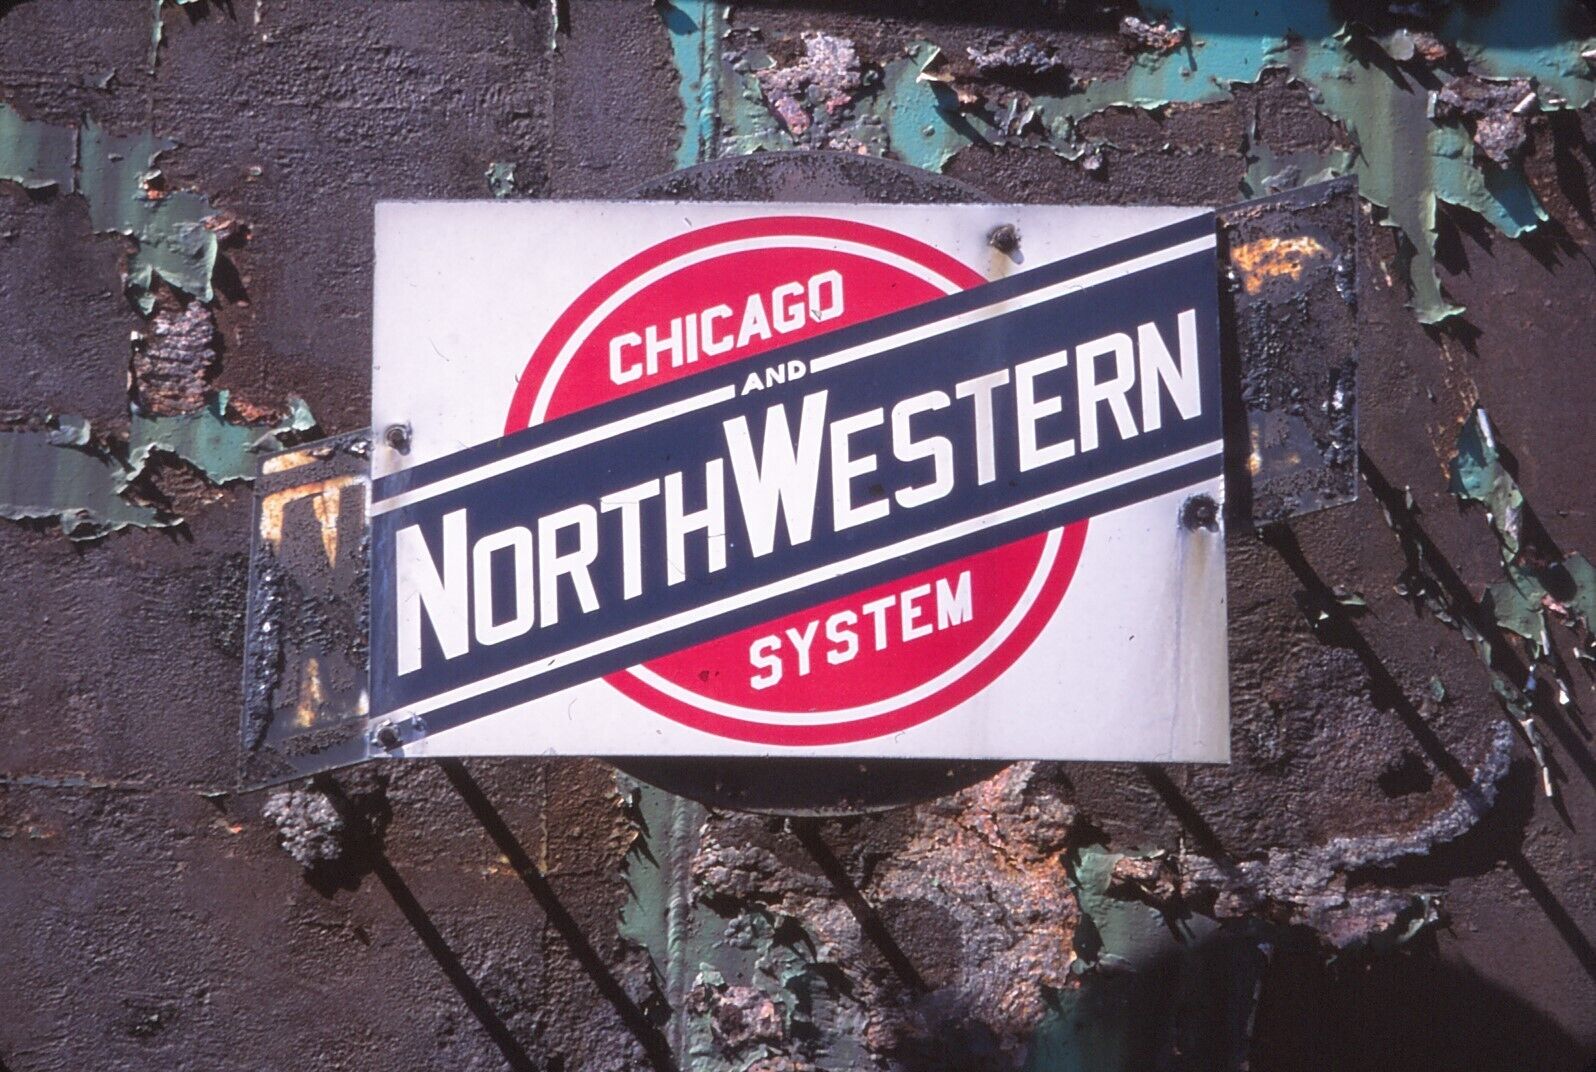 Original Fuji Railroad Slide C&NW Chicago Northwestern Logo Herald